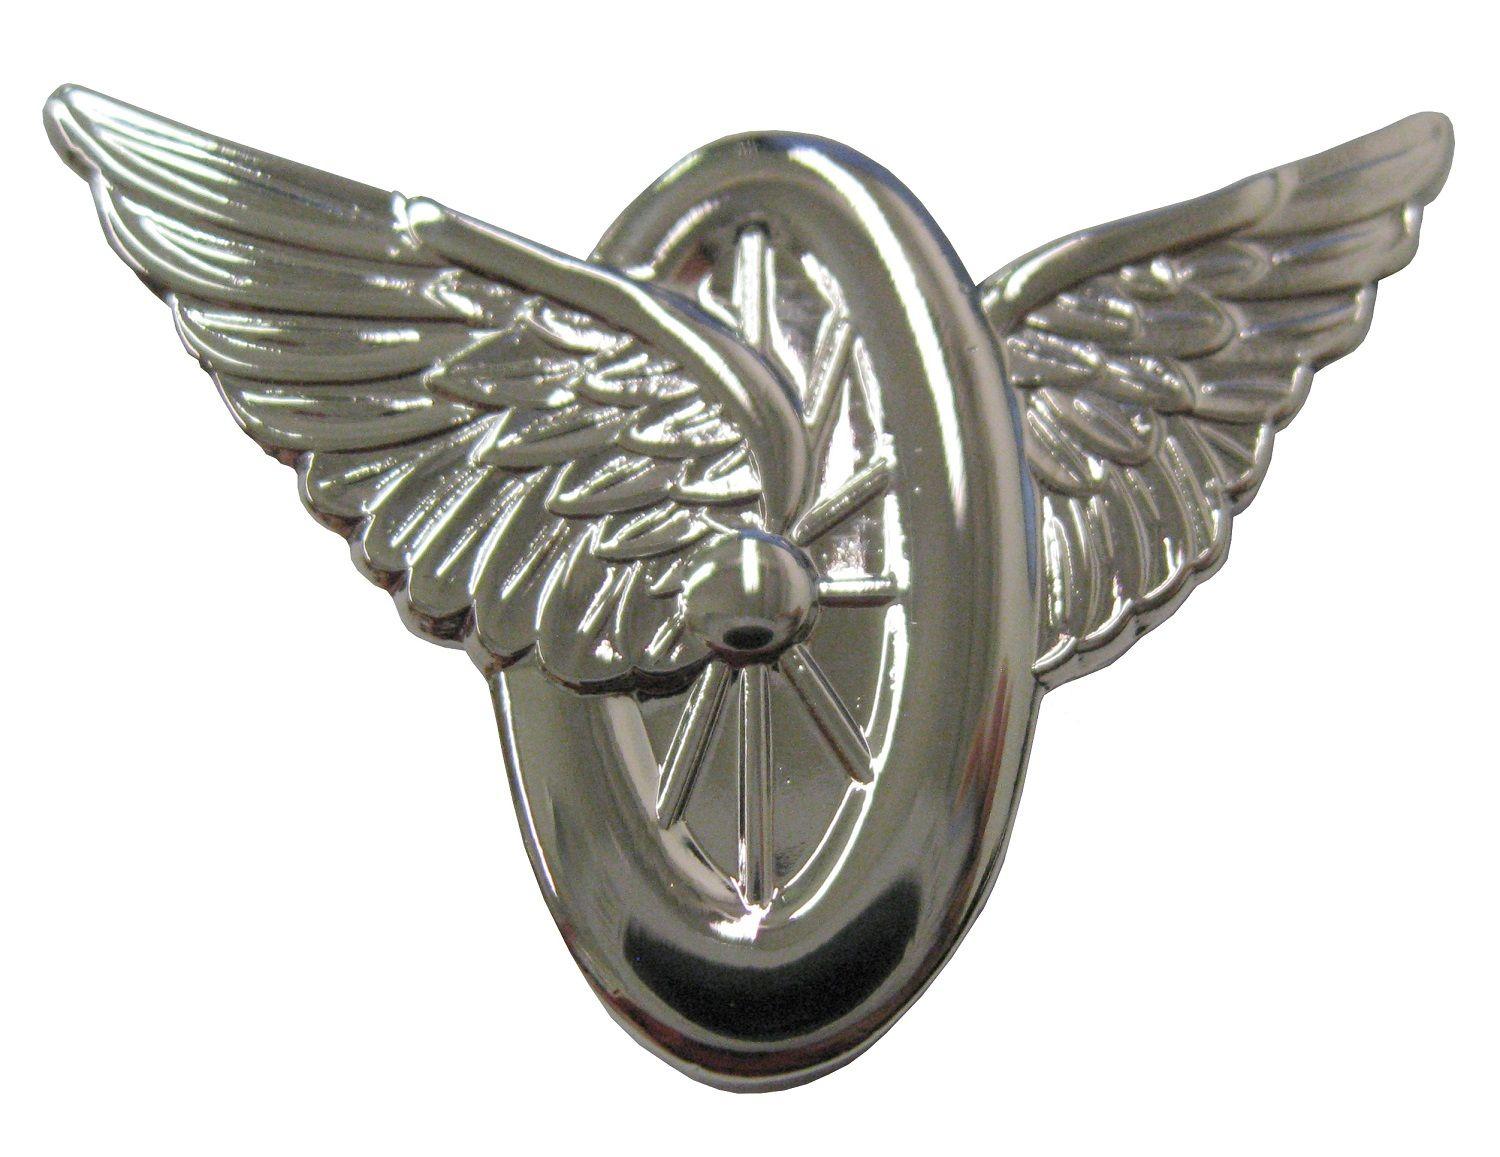 Motor Officer Logo - Motorcycle Officer Wings and Wheel Motorcycle Police Pin - Nickel